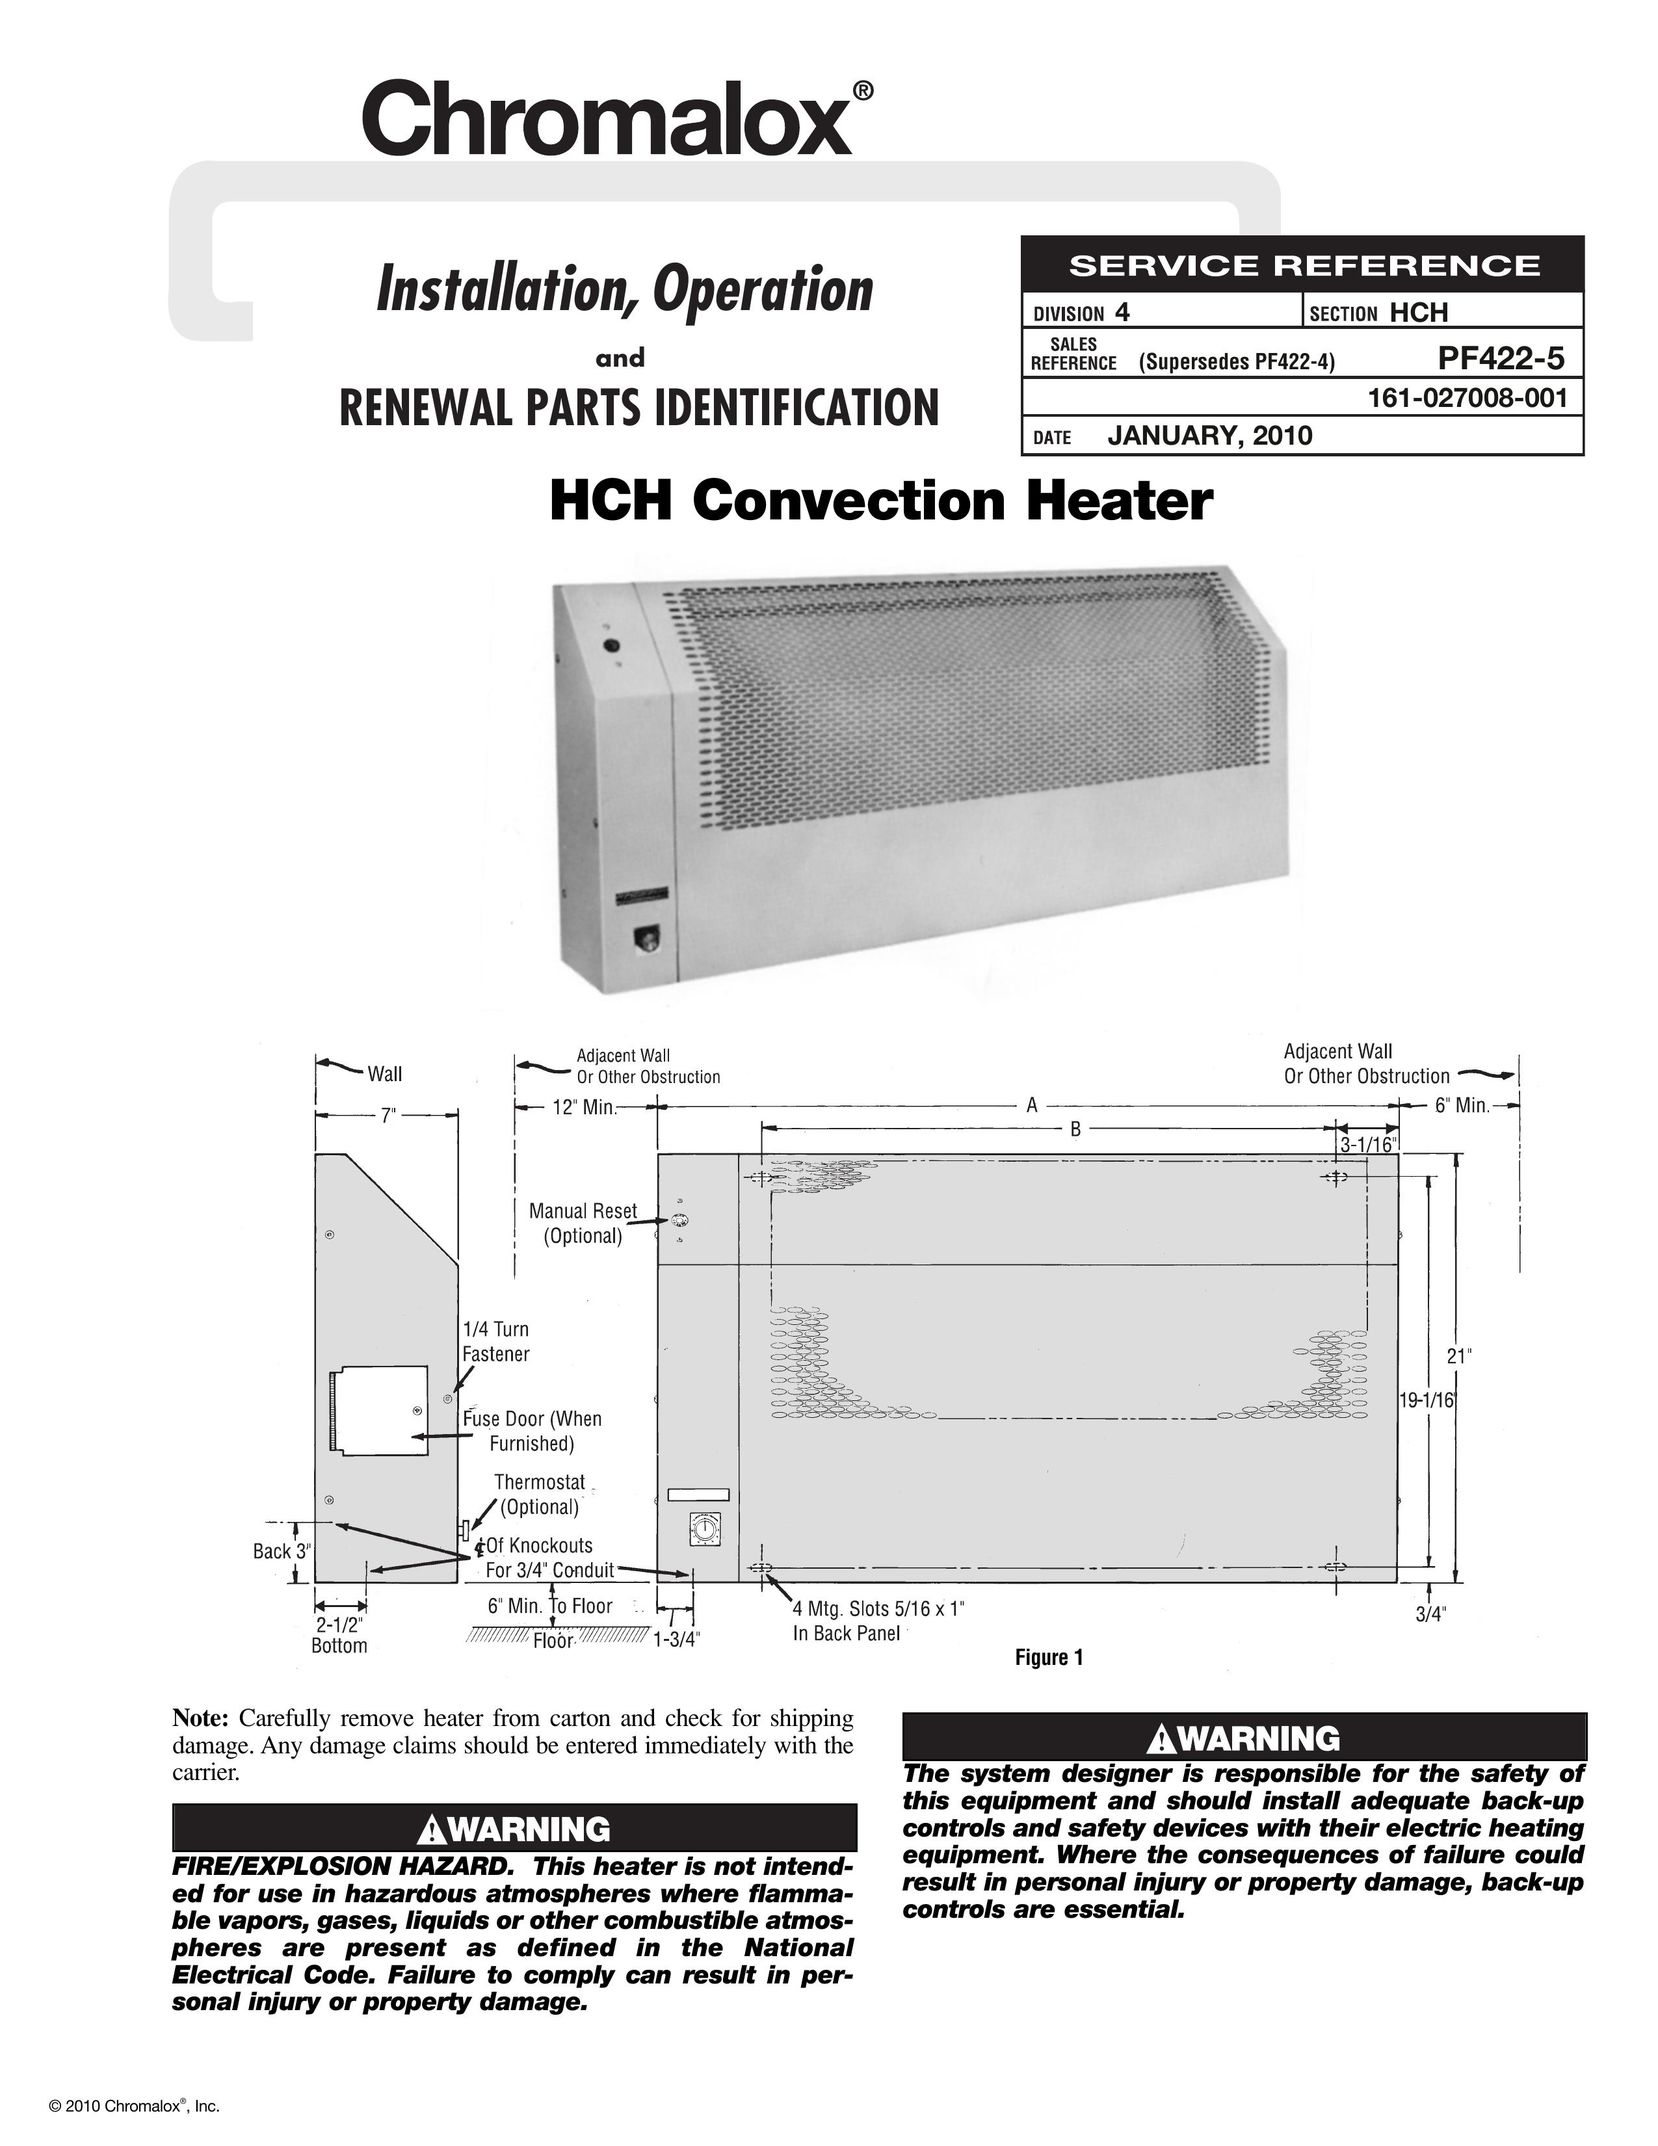 Chromalox PF422-5 Electric Heater User Manual